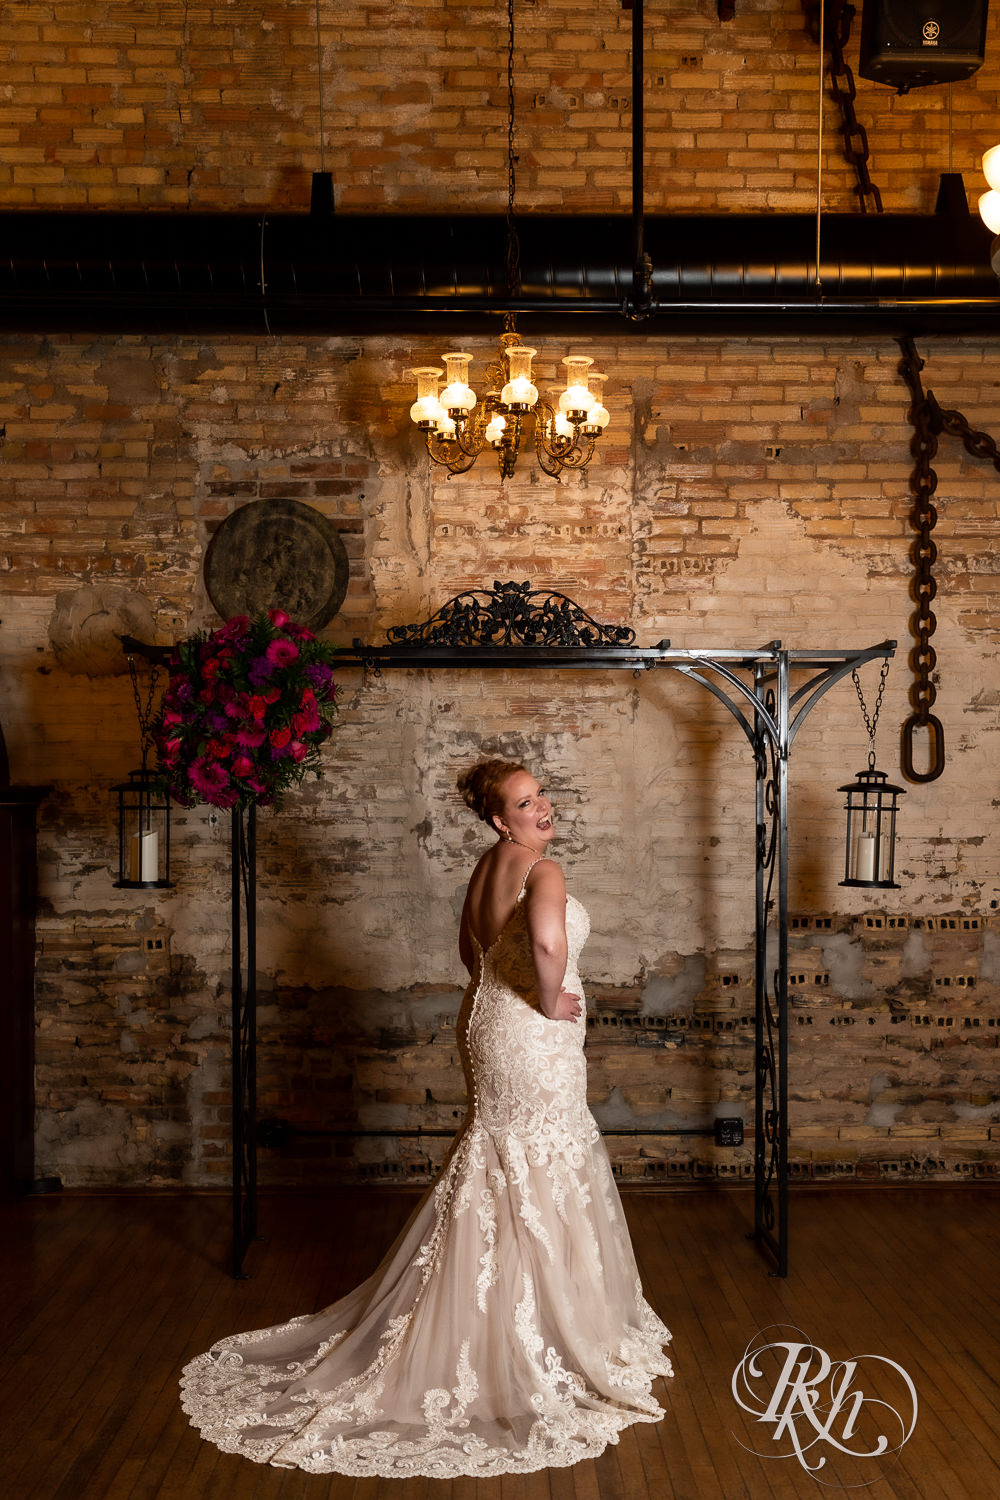 Bride at alter at Kellerman's Event Center in White Bear Lake, Minnesota.